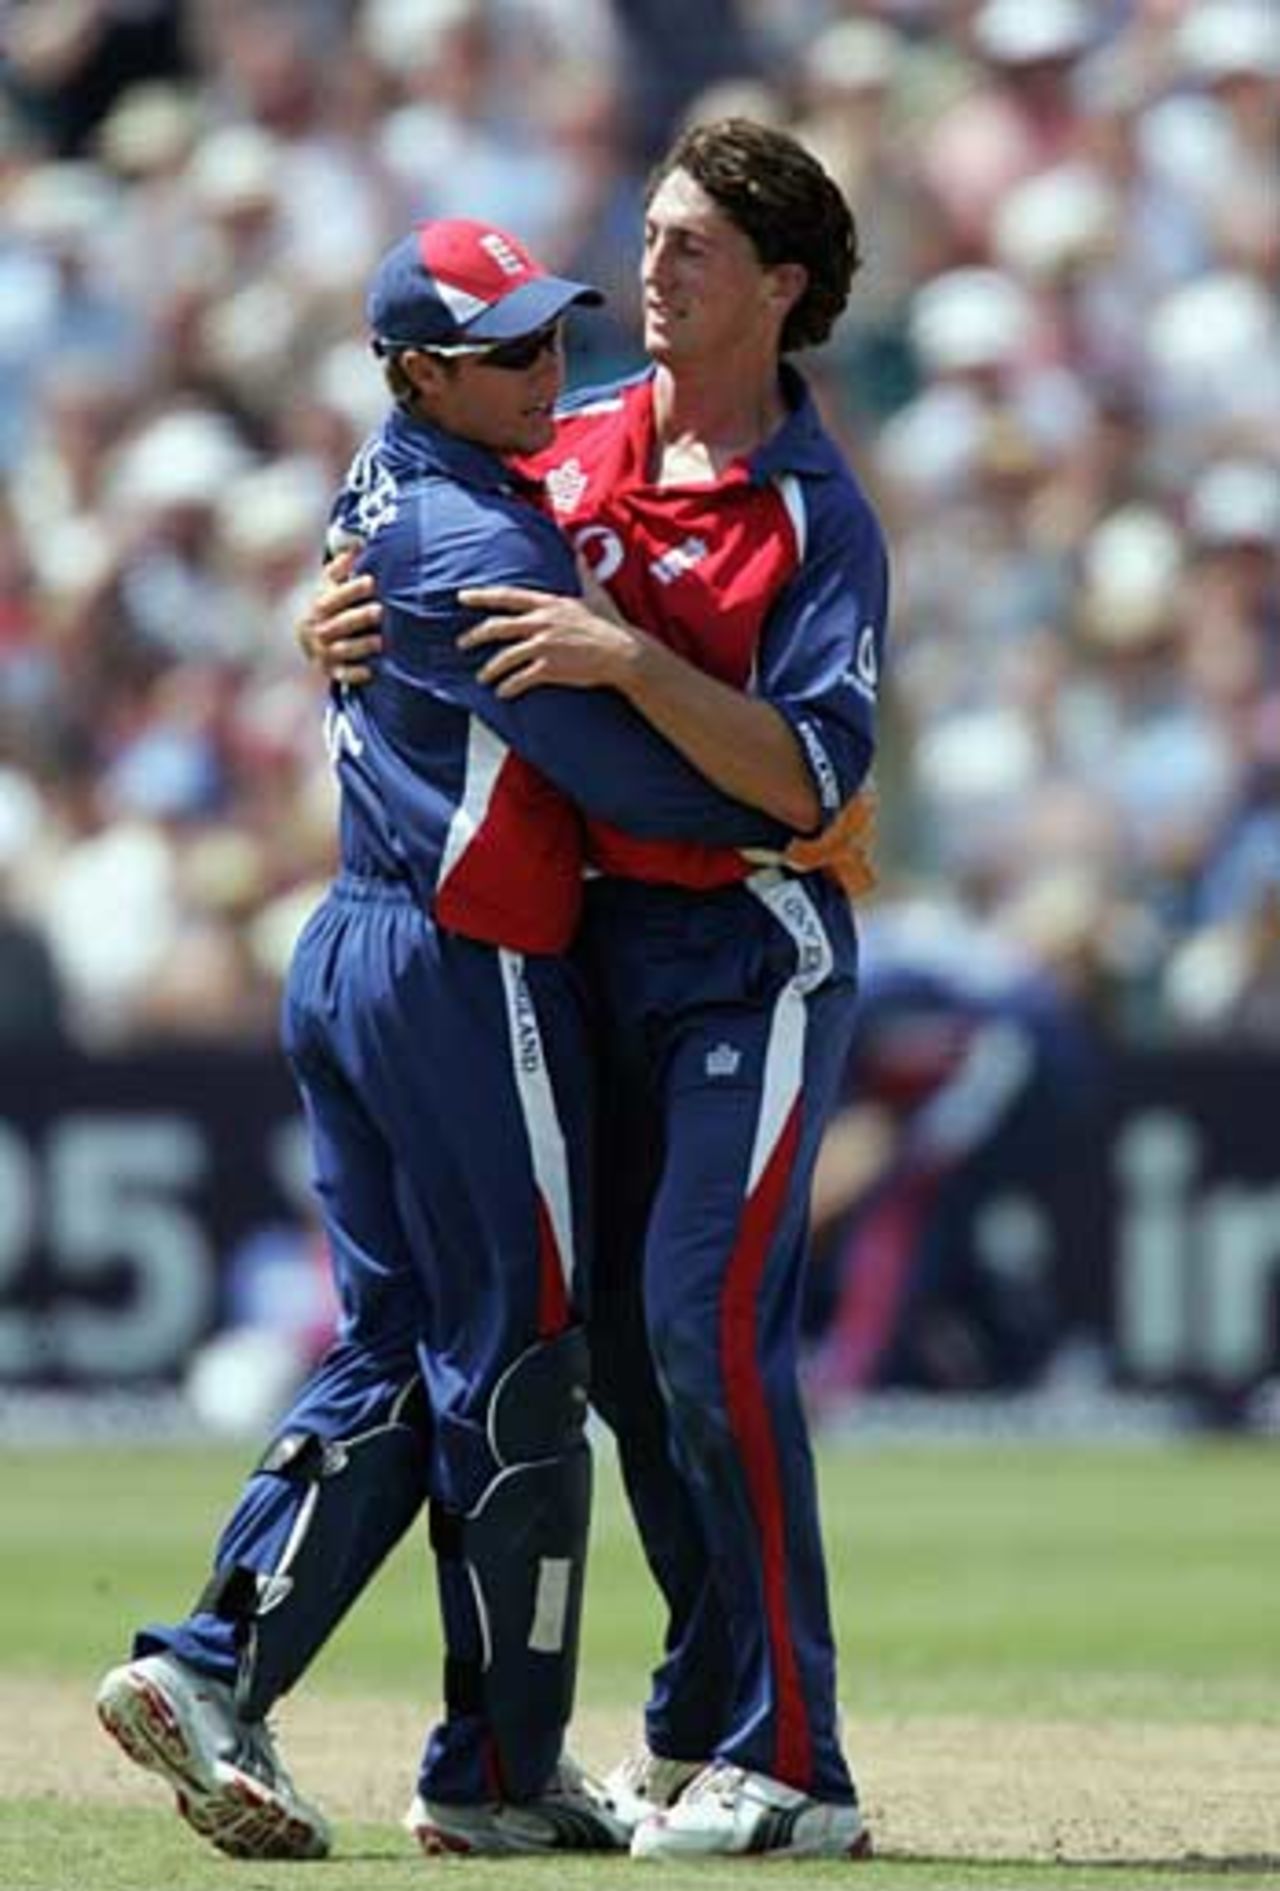 Jon Lewis and Geraint Jones after Michael Clarke was bowled, England v Australia, NatWest Series, Bristol, June 19